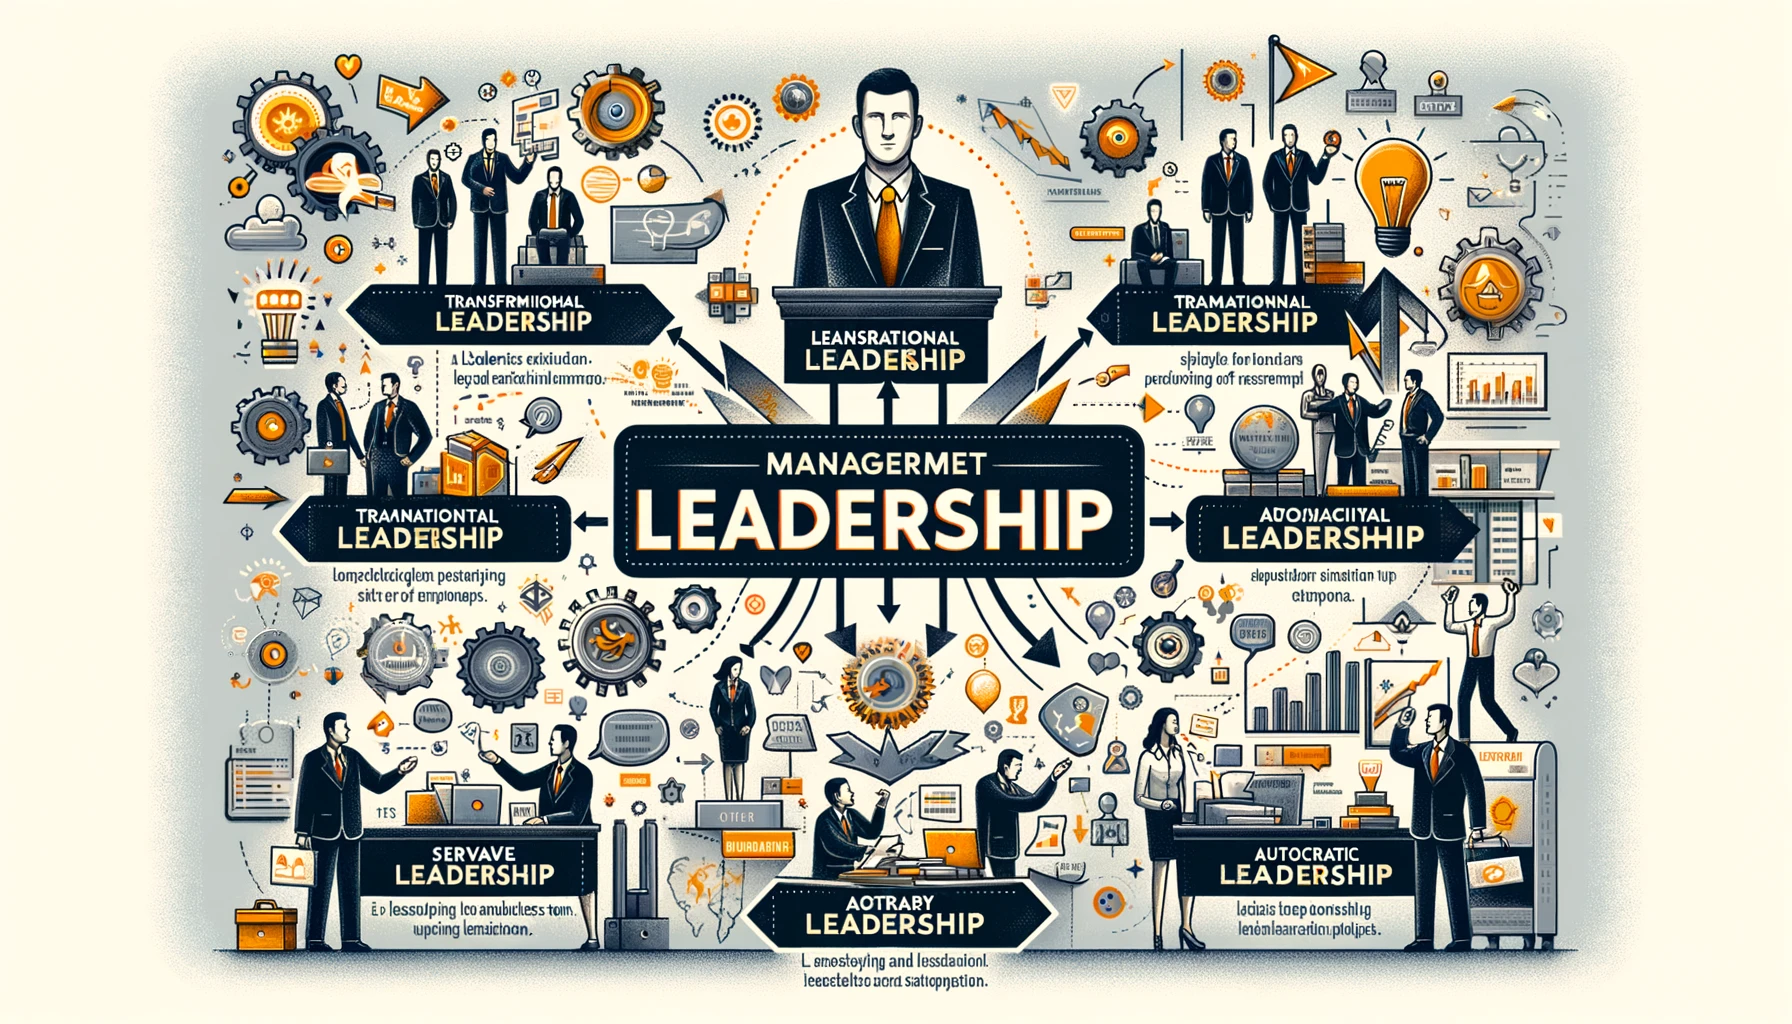 Management Leadership Theories